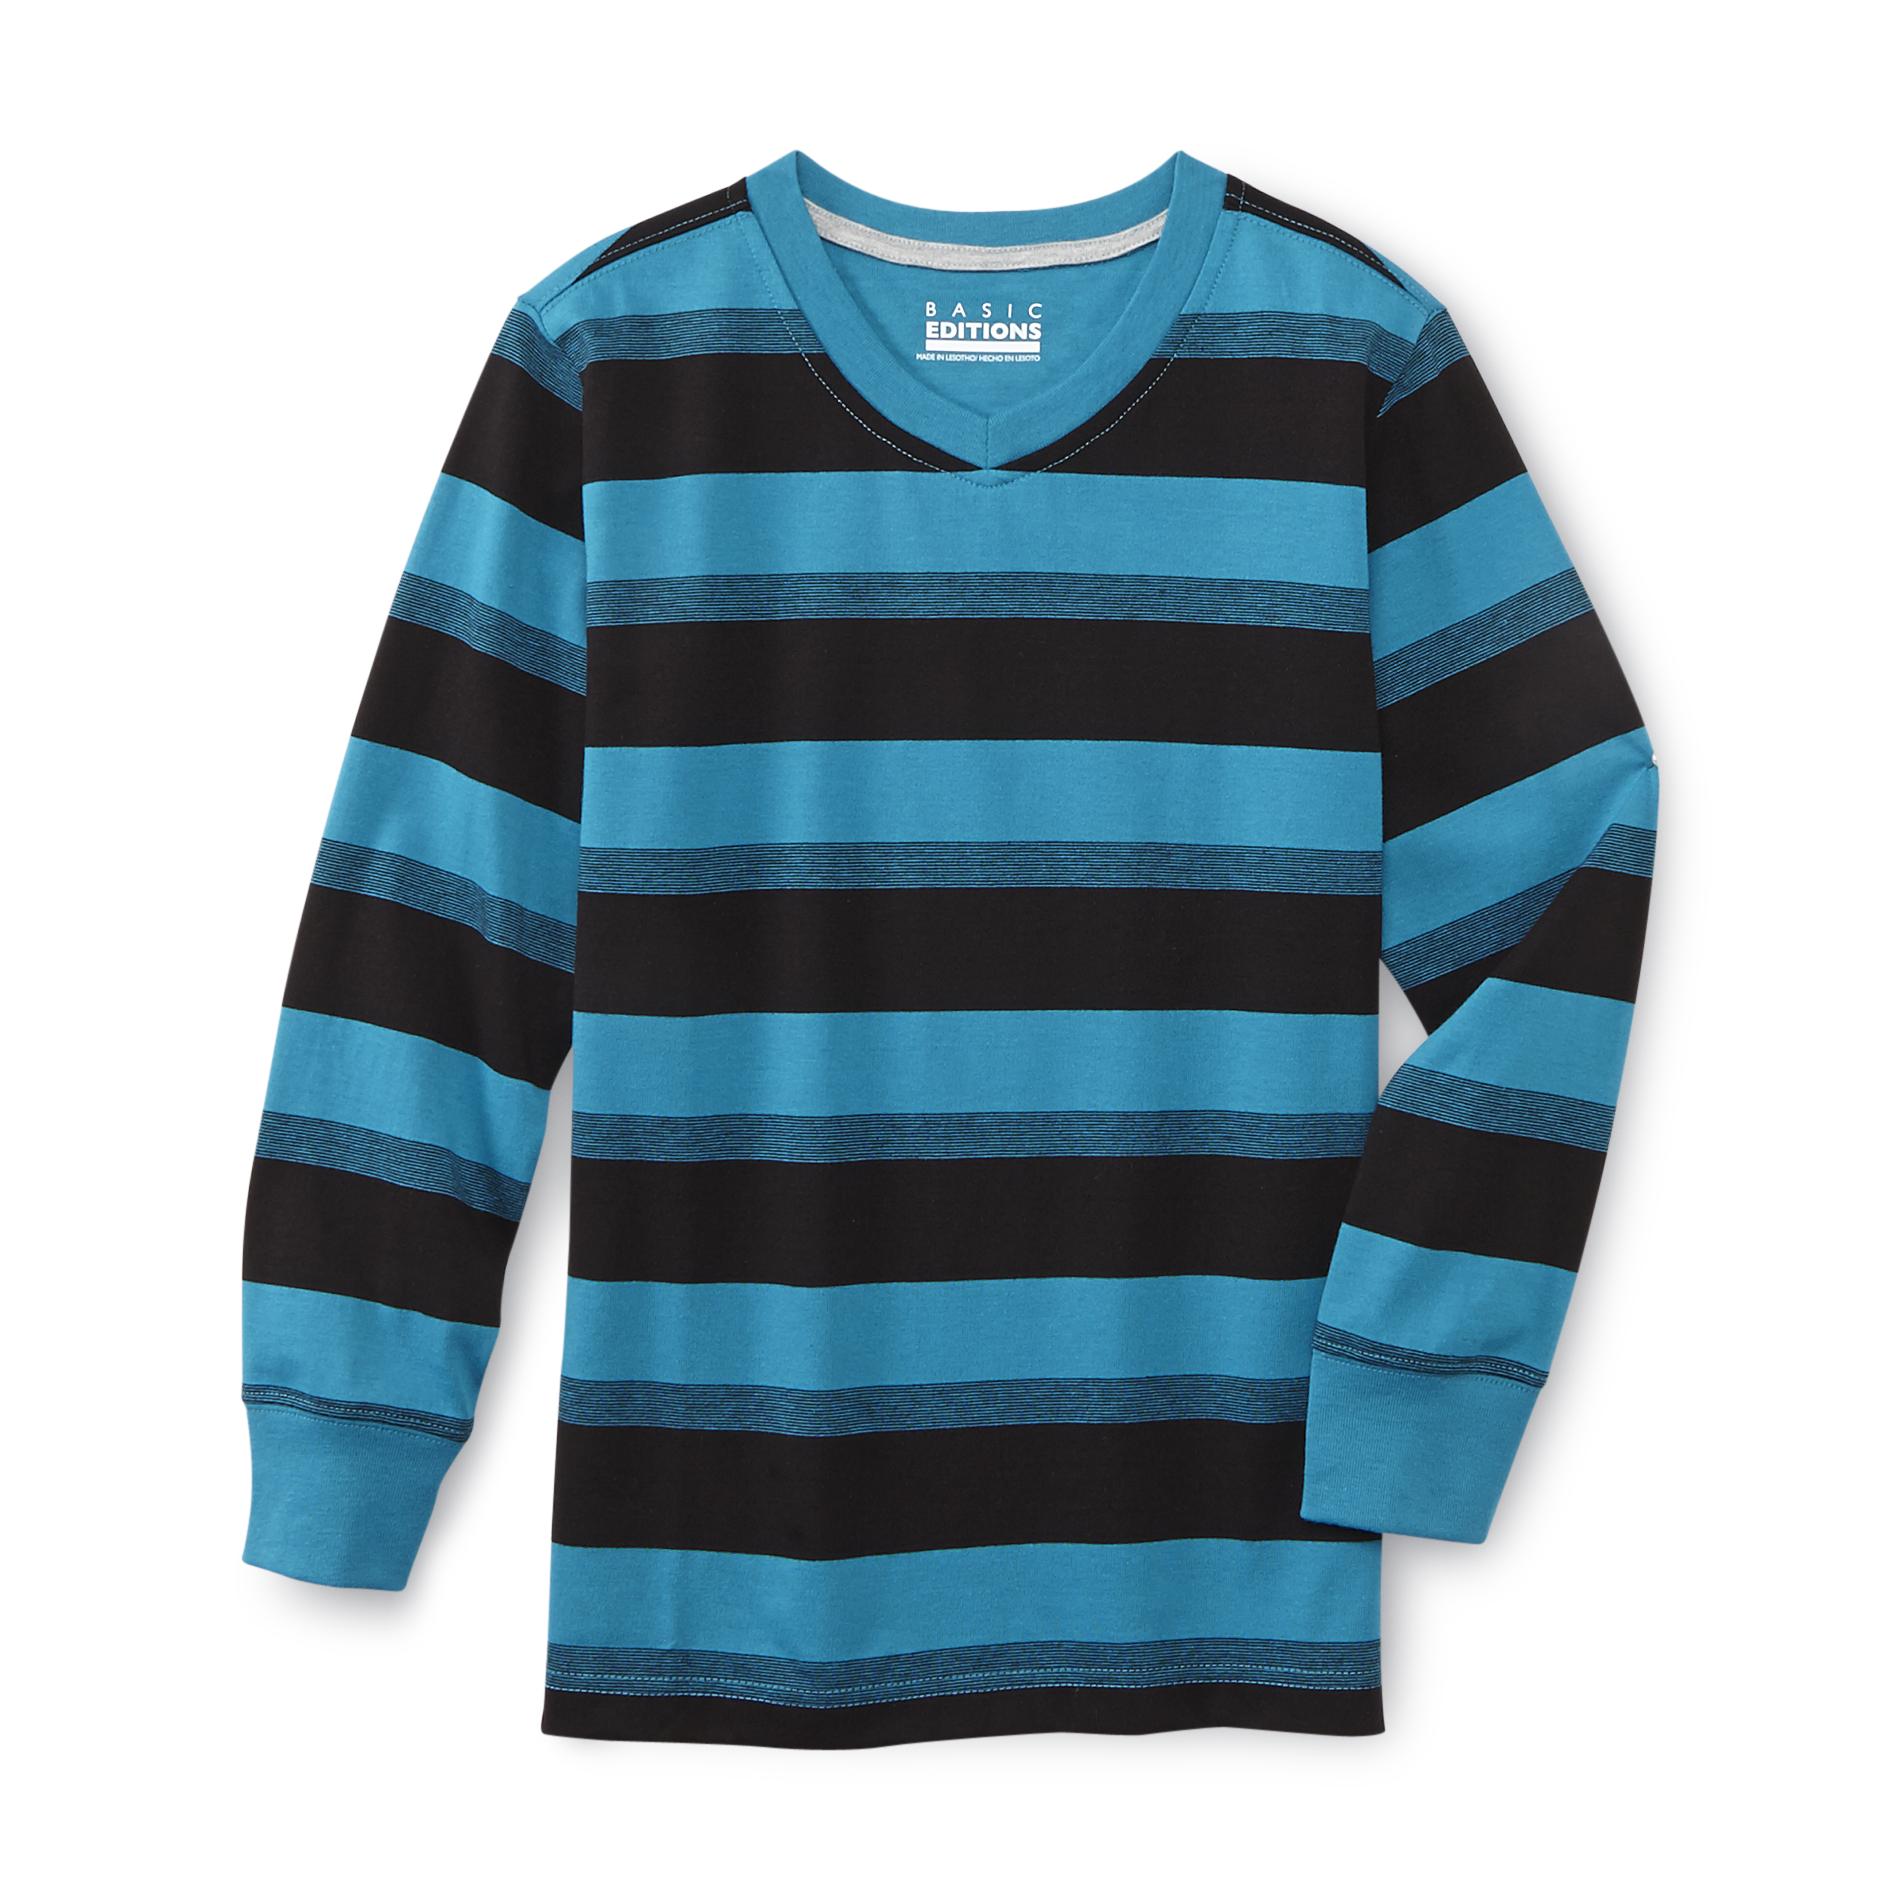 Basic Editions Boy's Long-Sleeve T-shirt - Striped